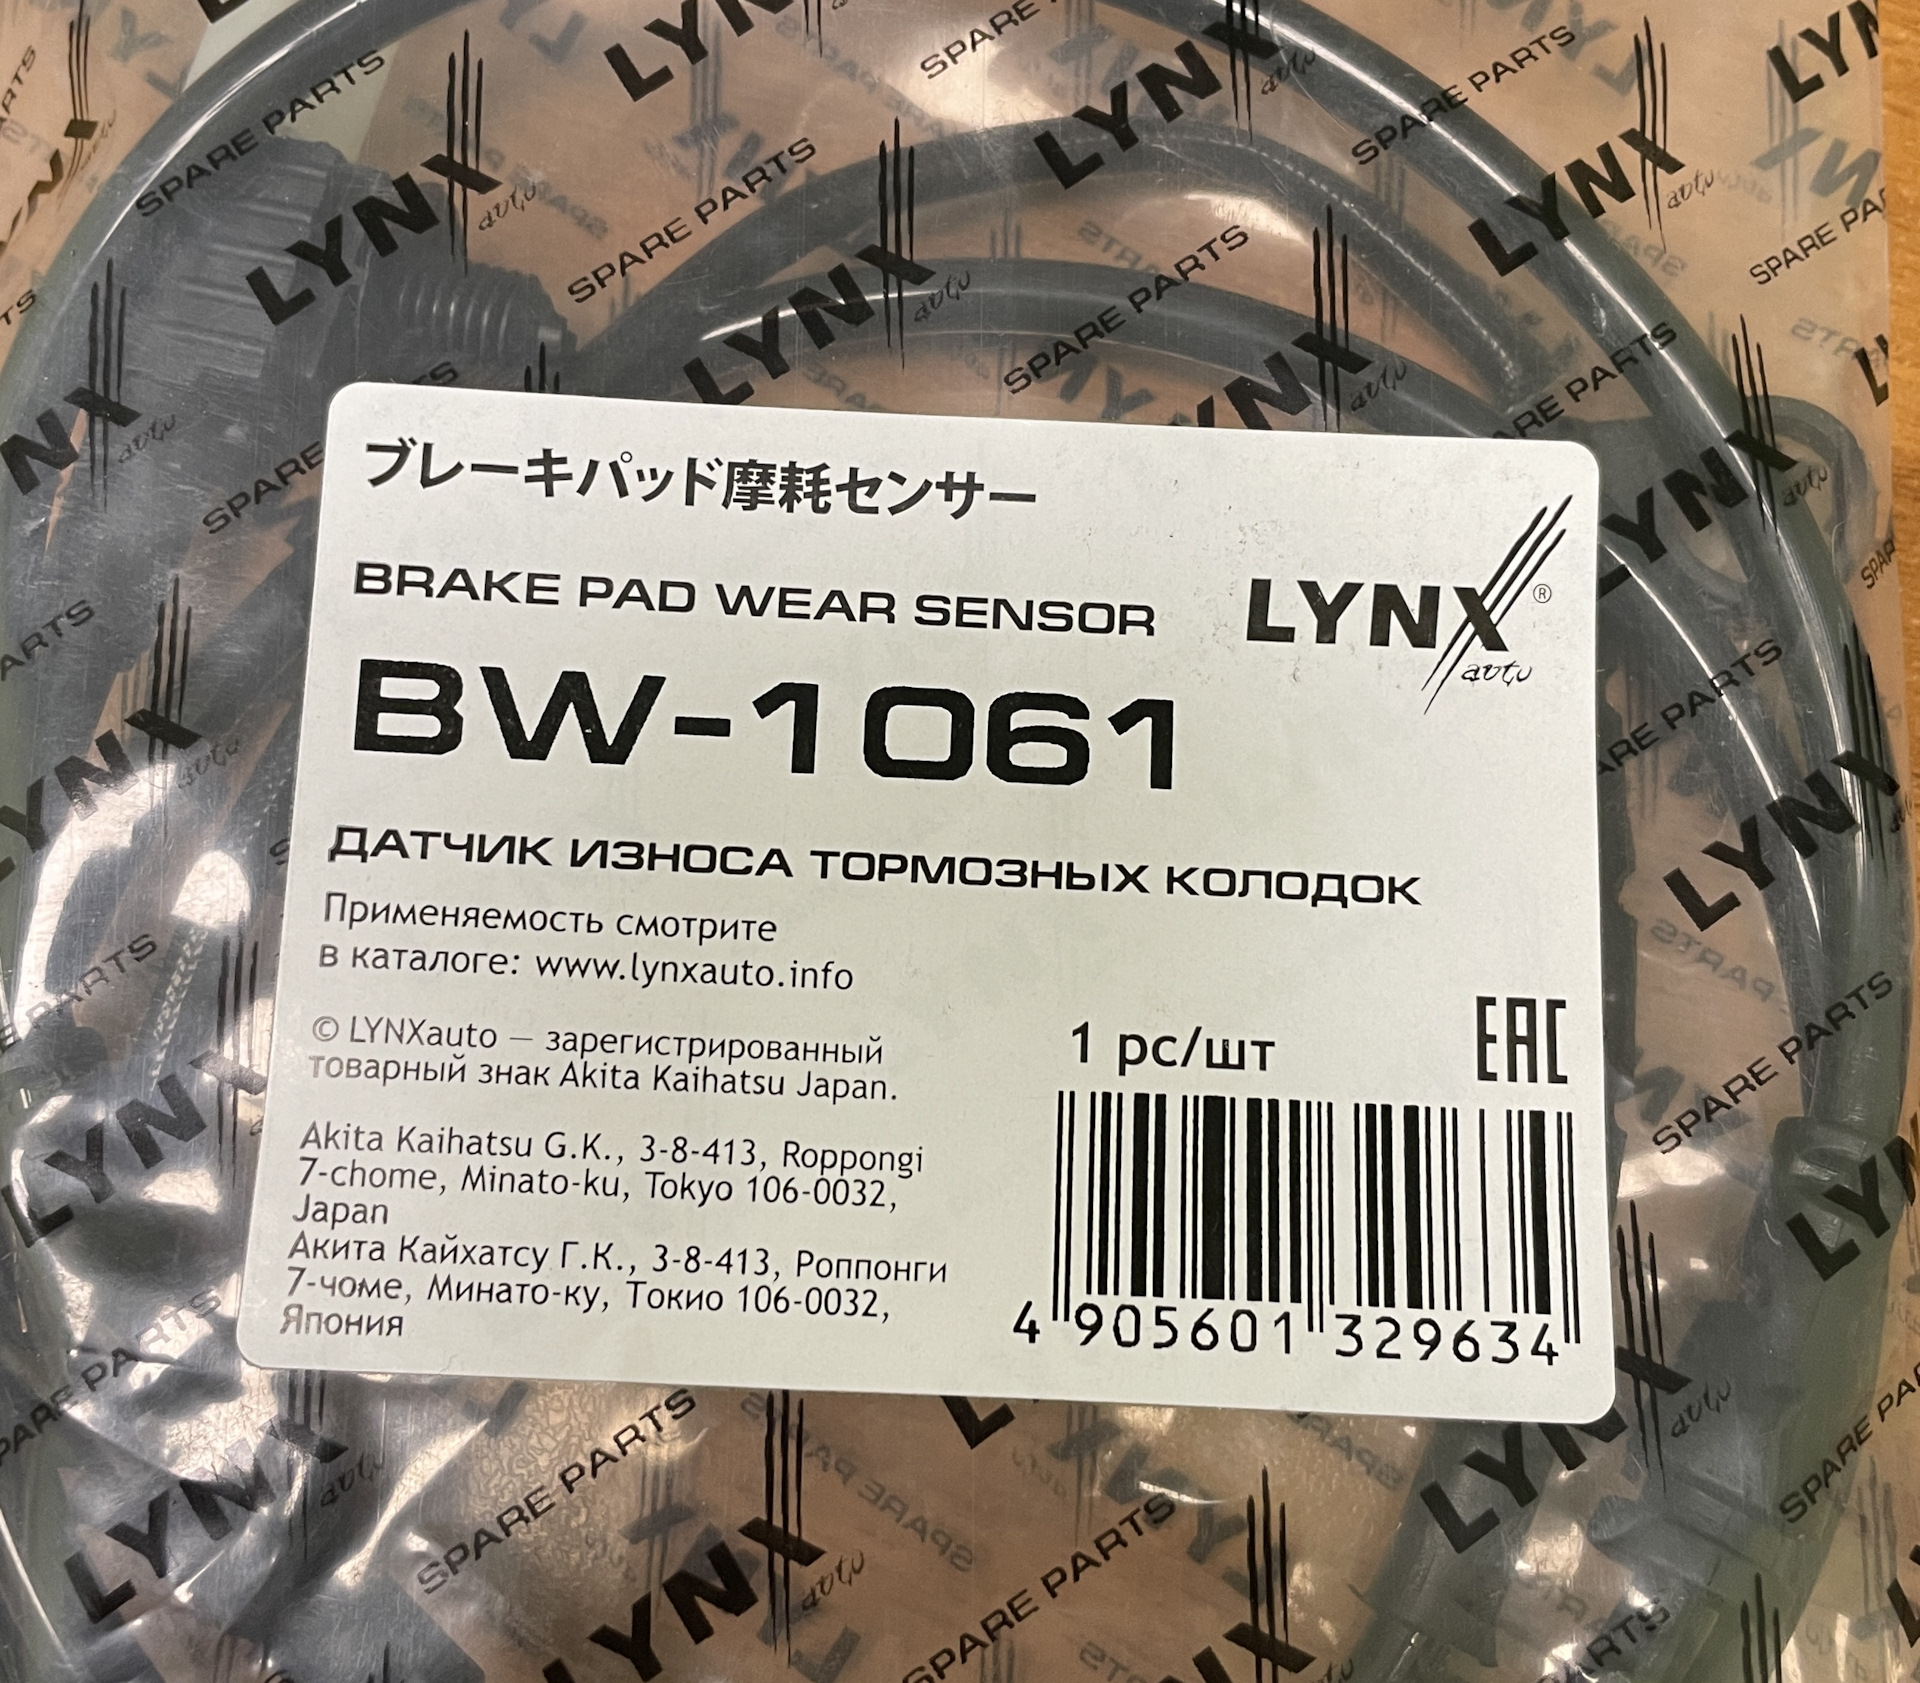 Деталь износа e307488. Lynx SG-1061. Палец jev00066 - производитель lget.